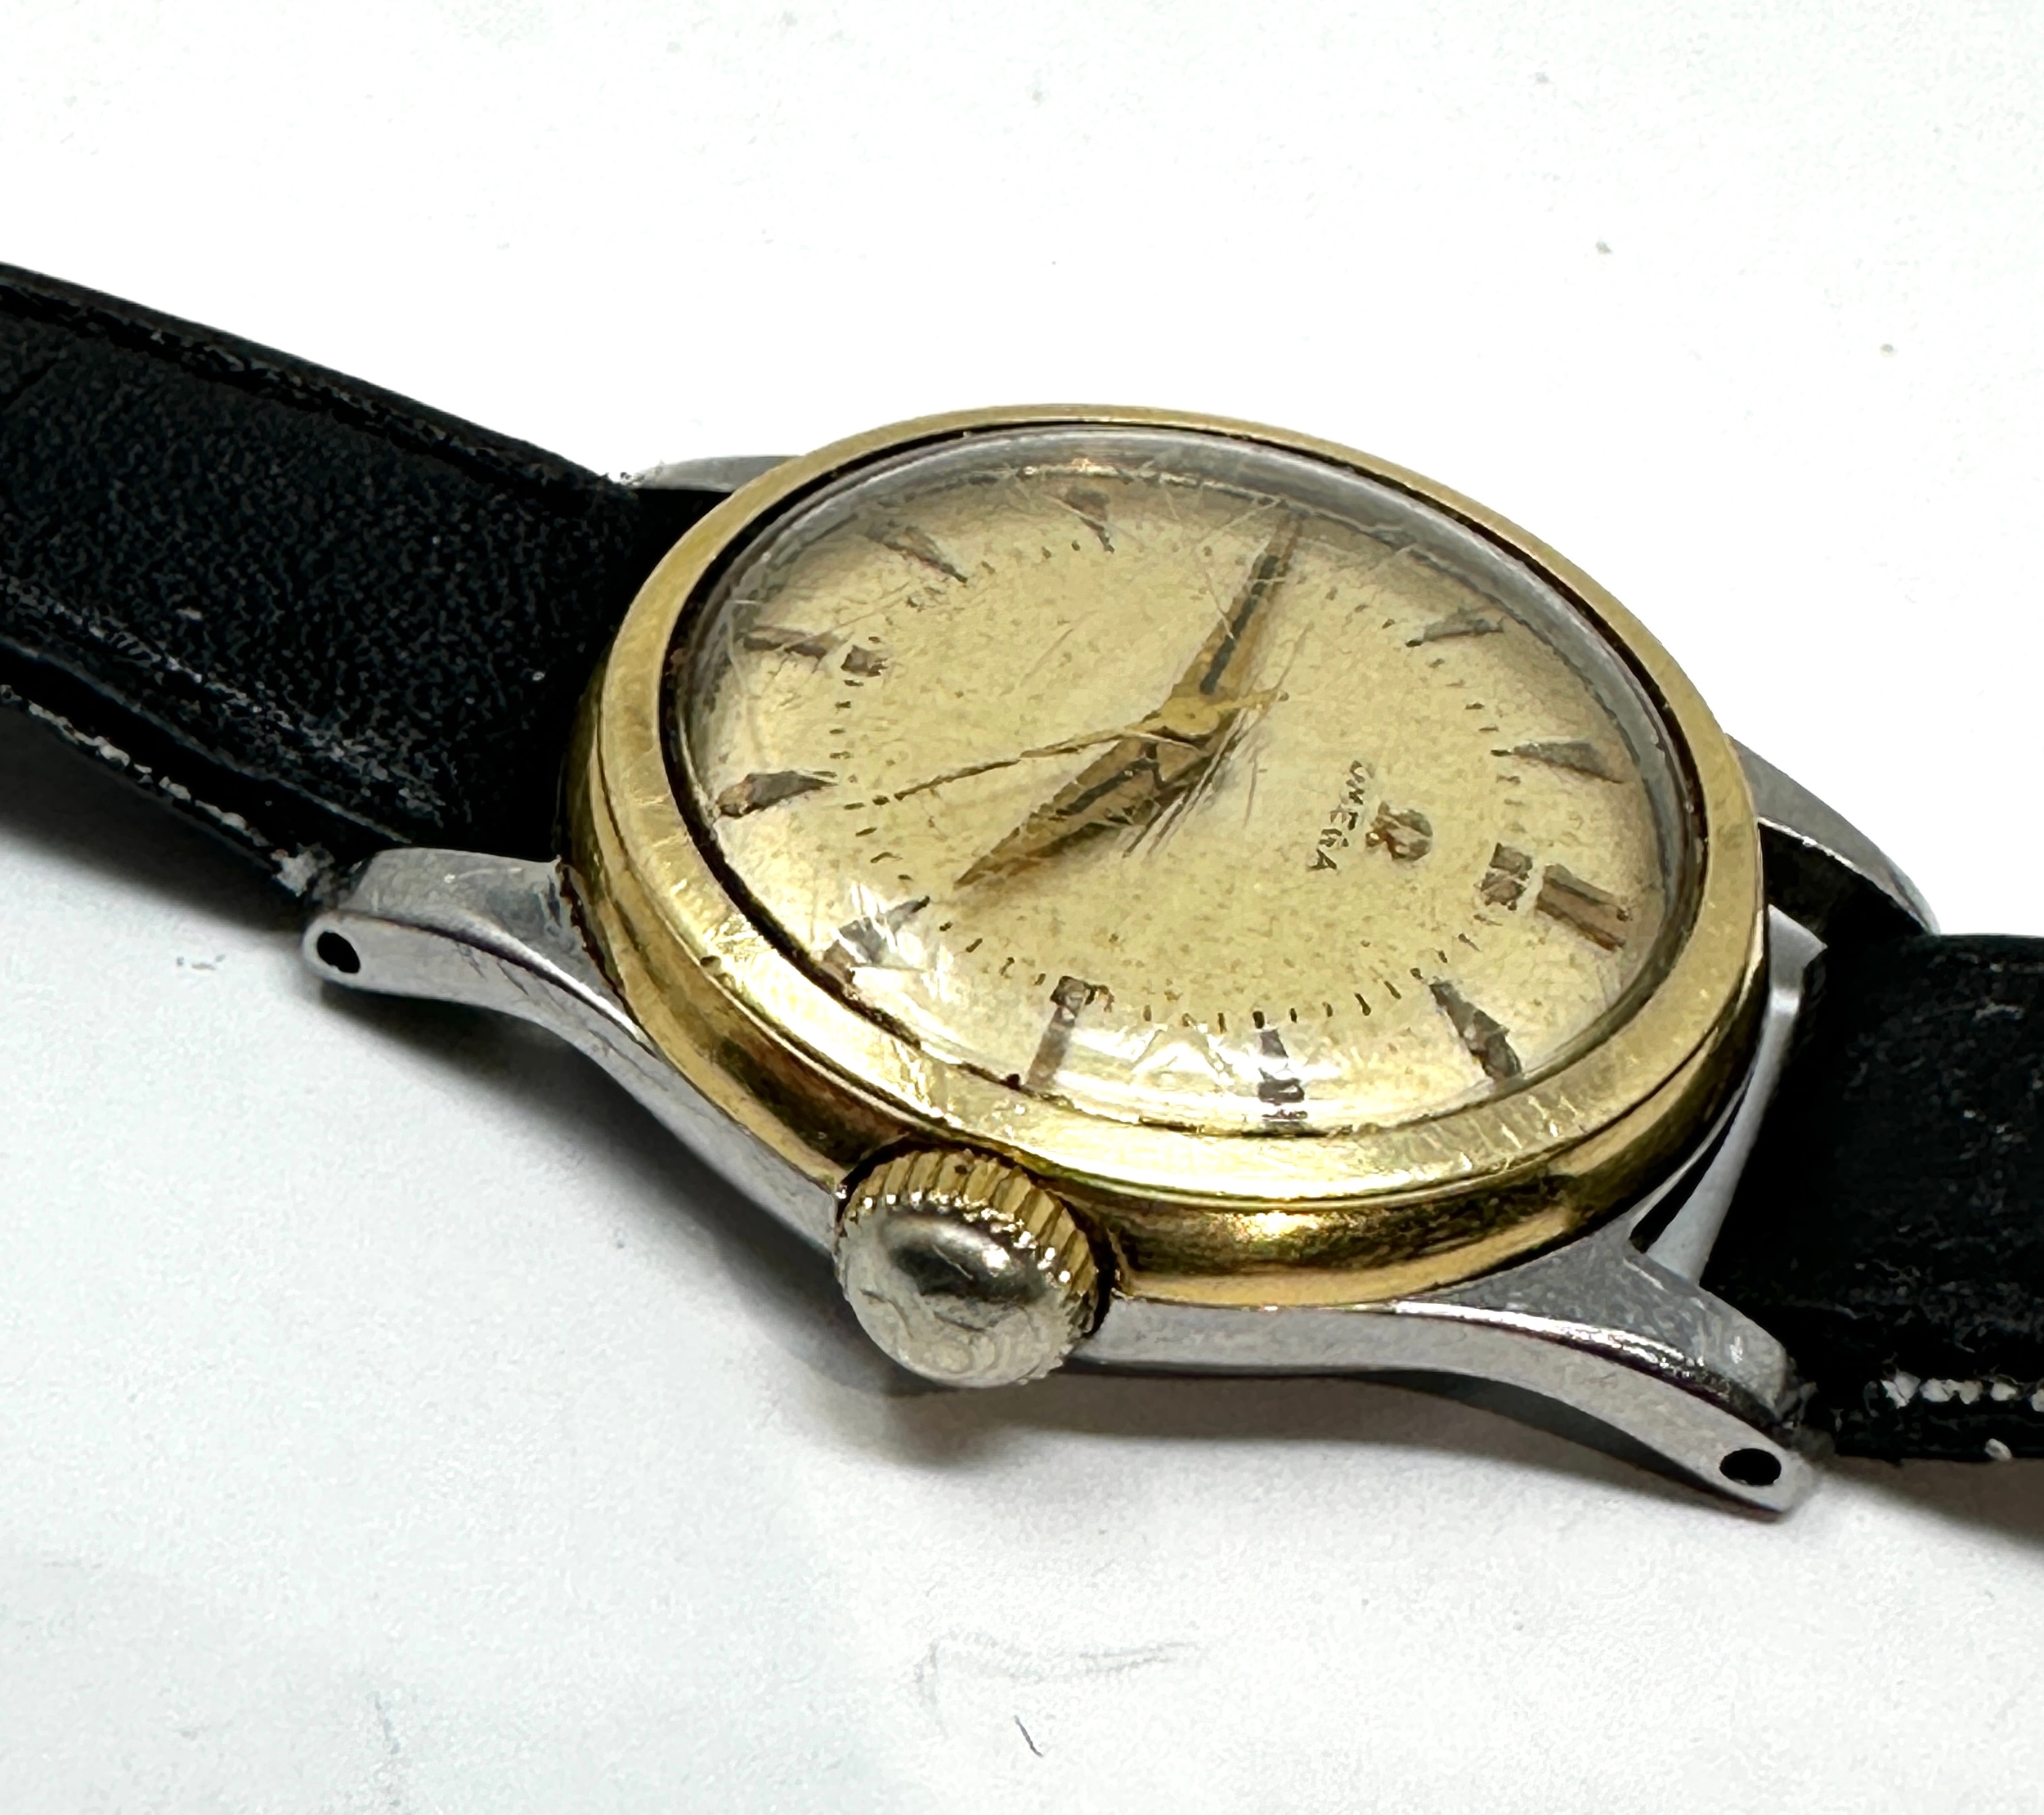 vintage ladies omega wristwatch cal 252 the watch ticks when shaken the winder keeps winding - Image 2 of 6